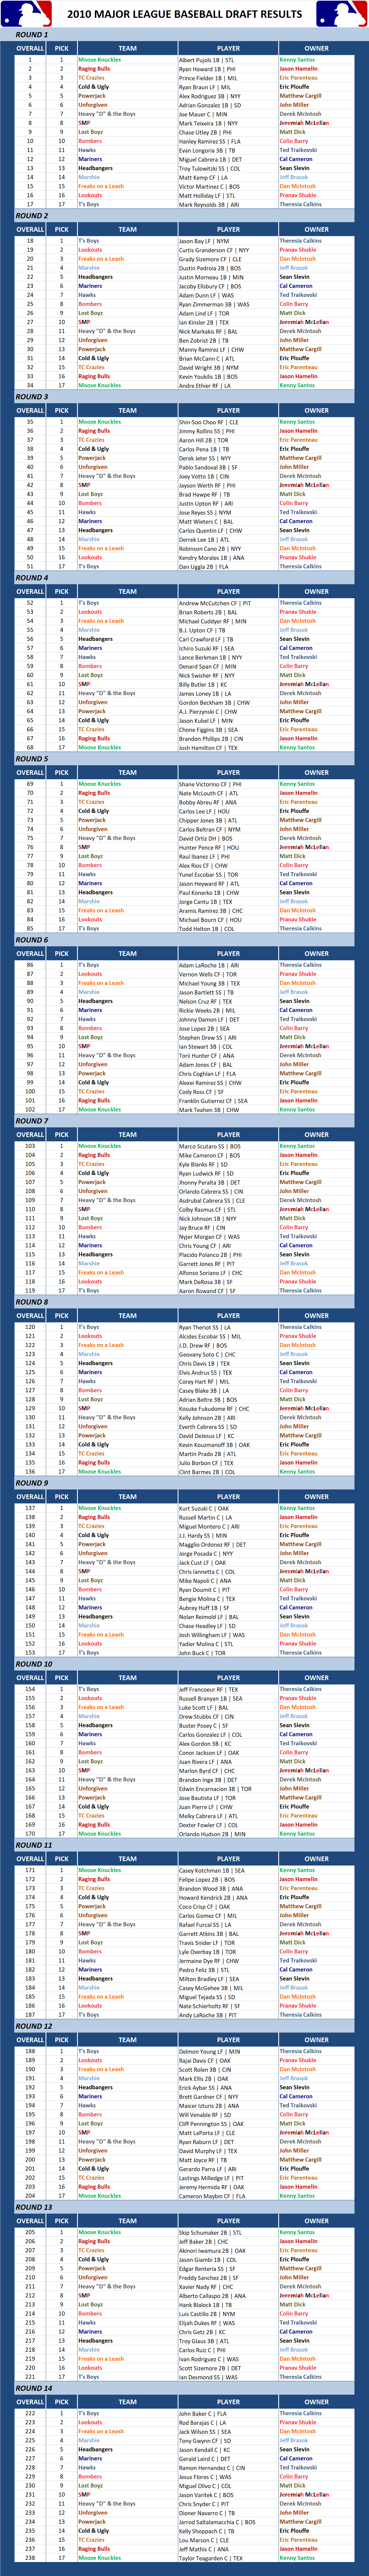 2010 Major league Baseball Draft Results